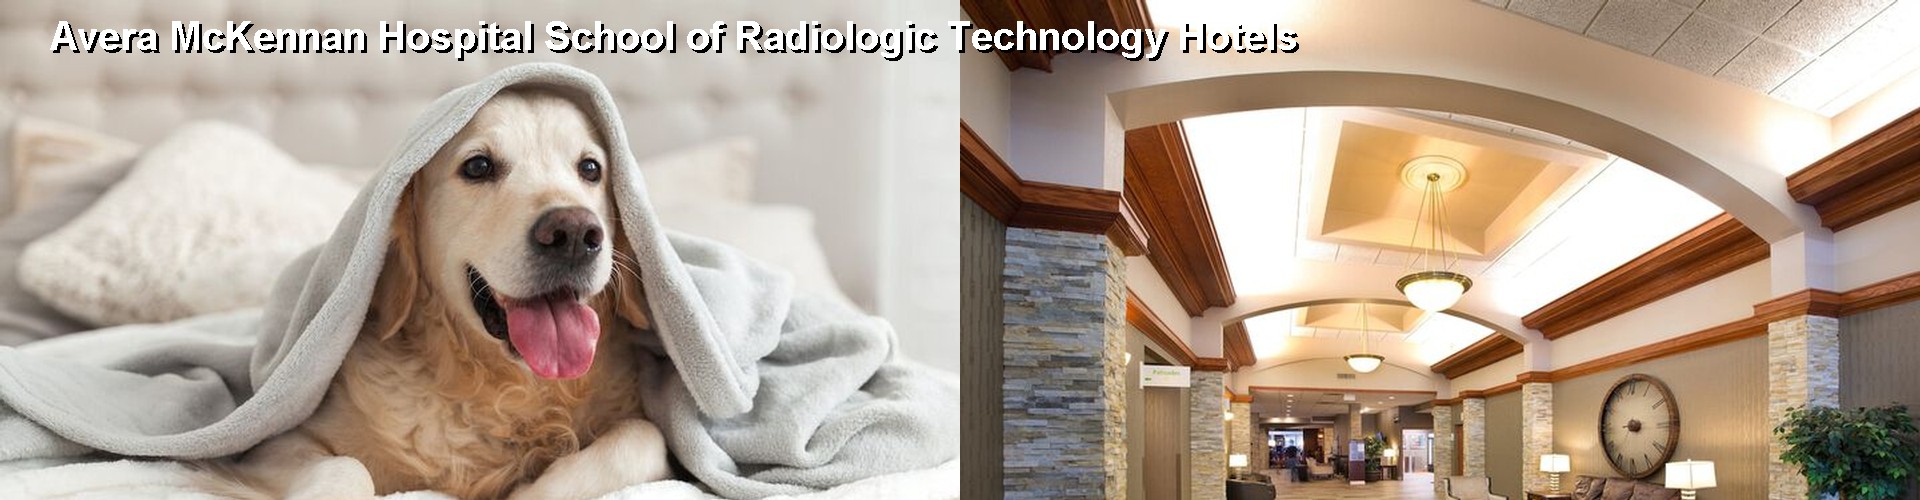 5 Best Hotels near Avera McKennan Hospital School of Radiologic Technology